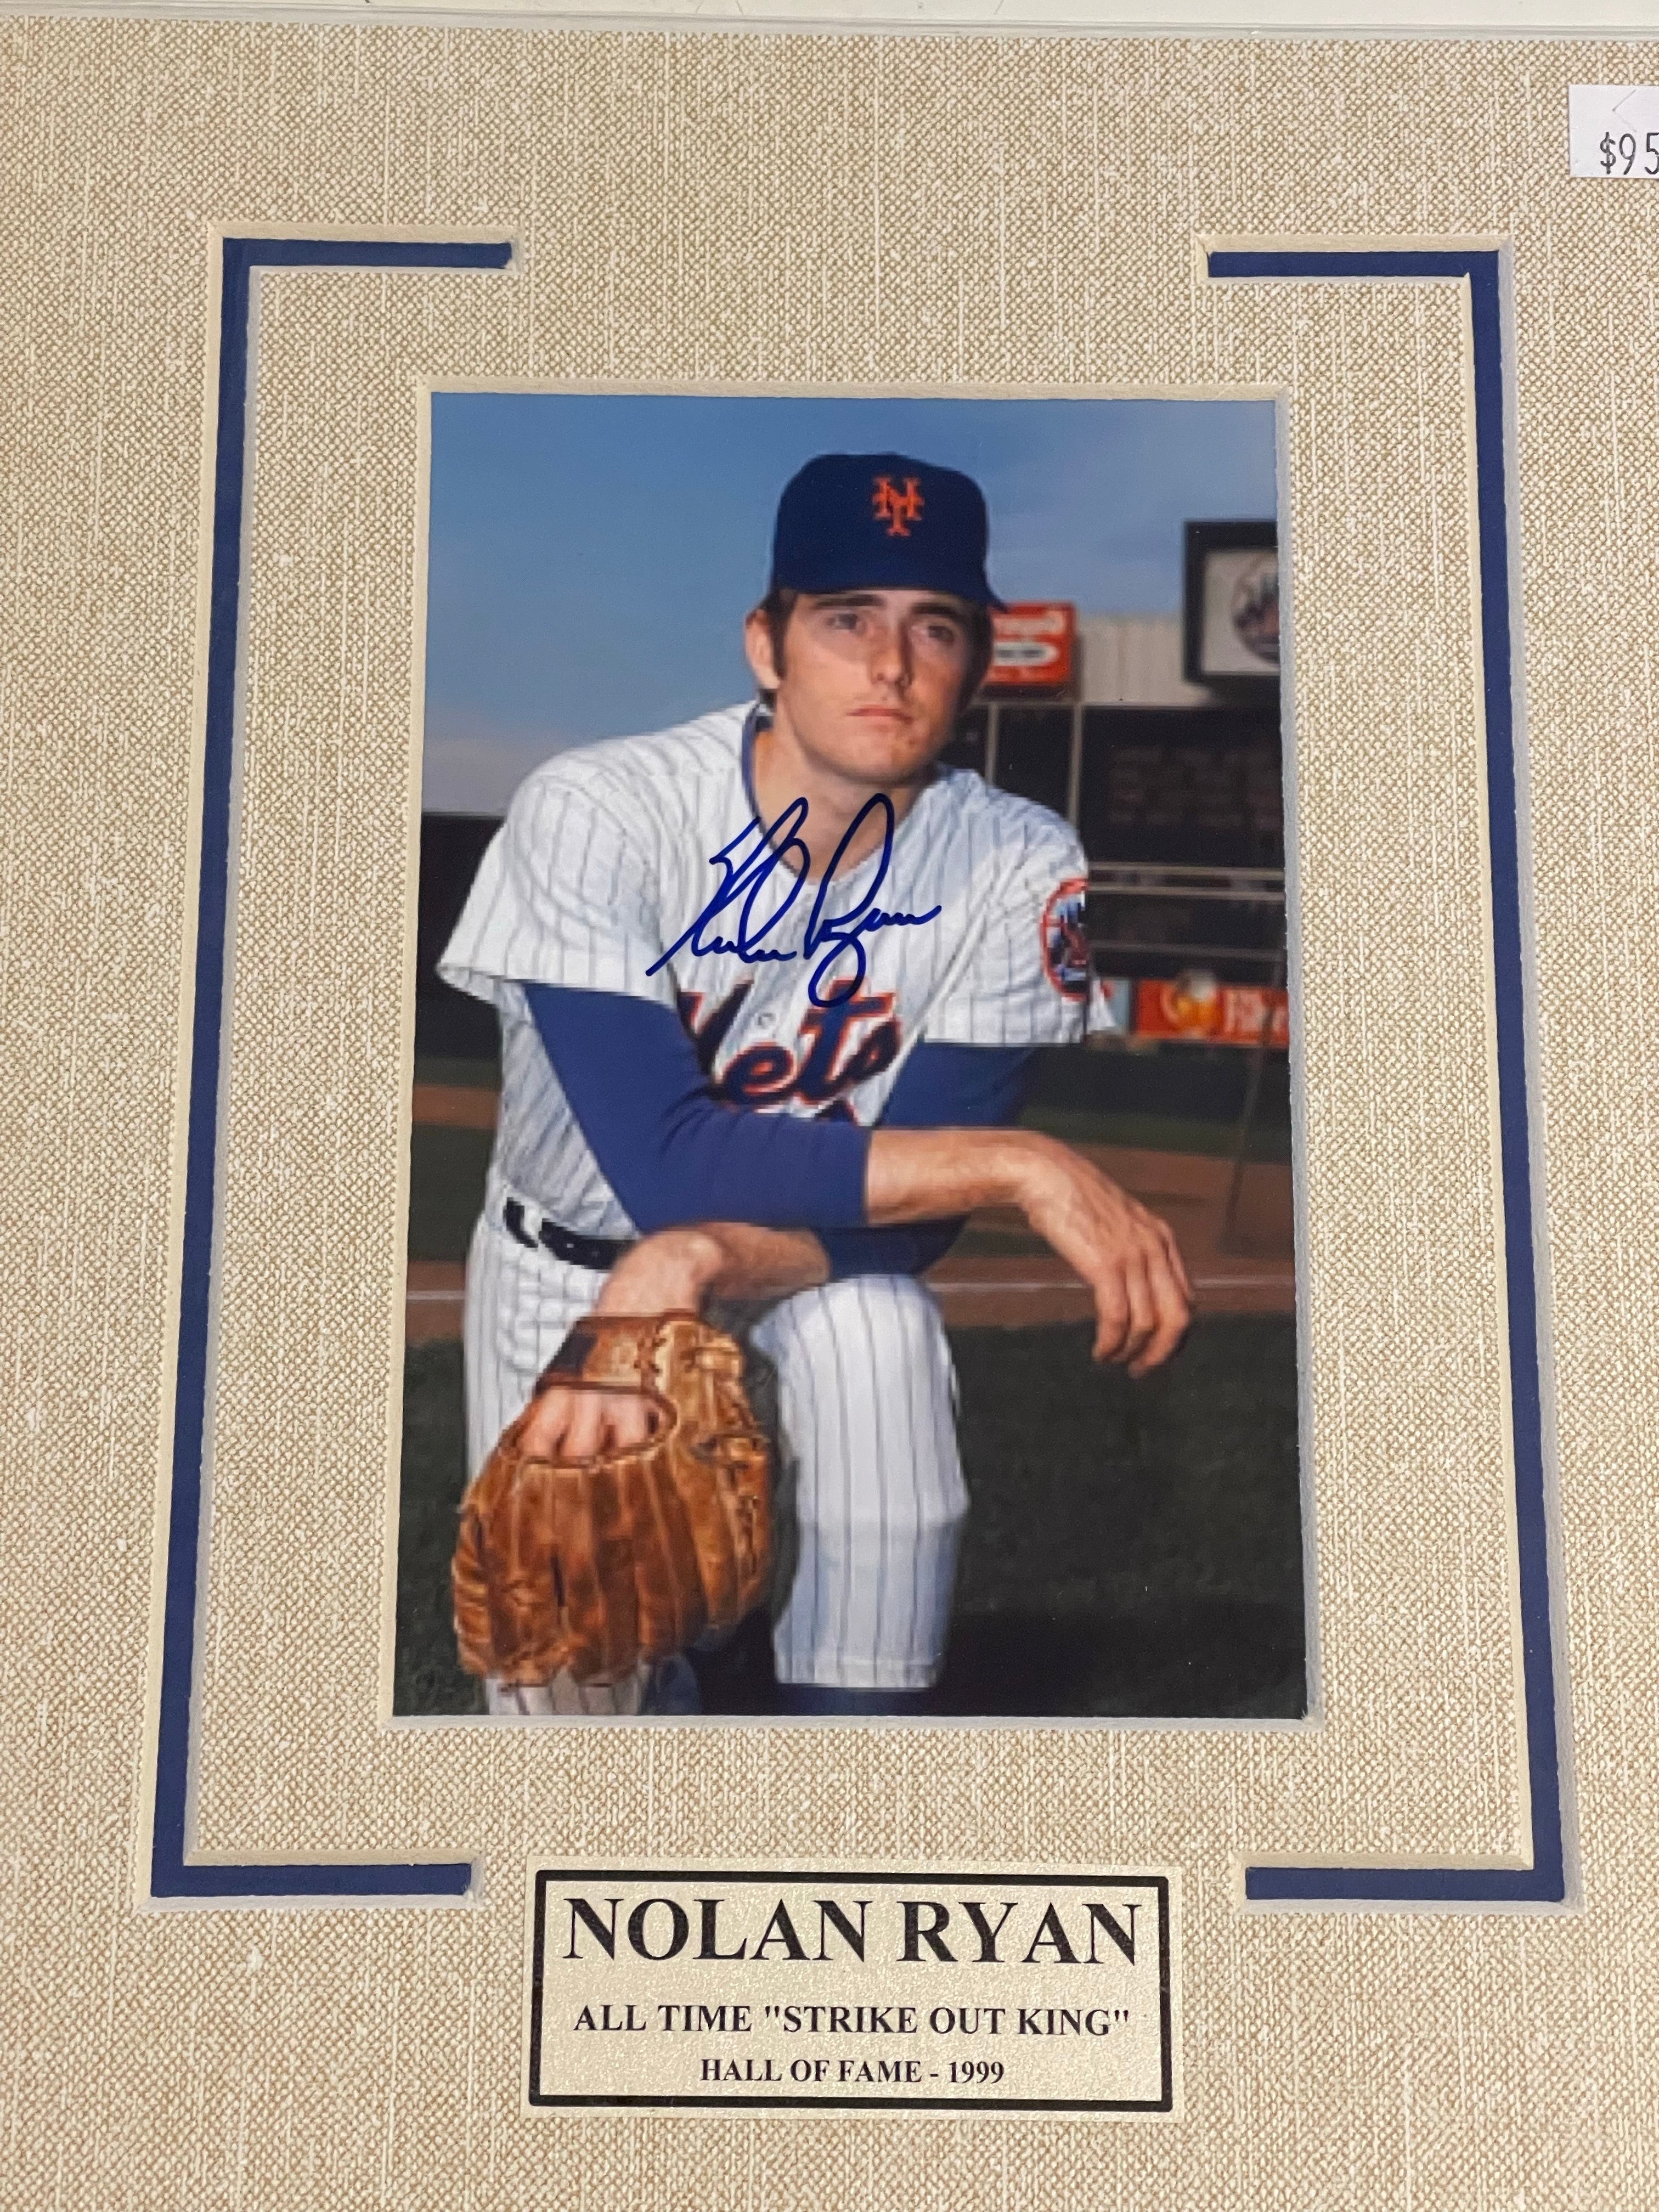 Nolan Ryan New York Mets autograph 8x10 photo with COA